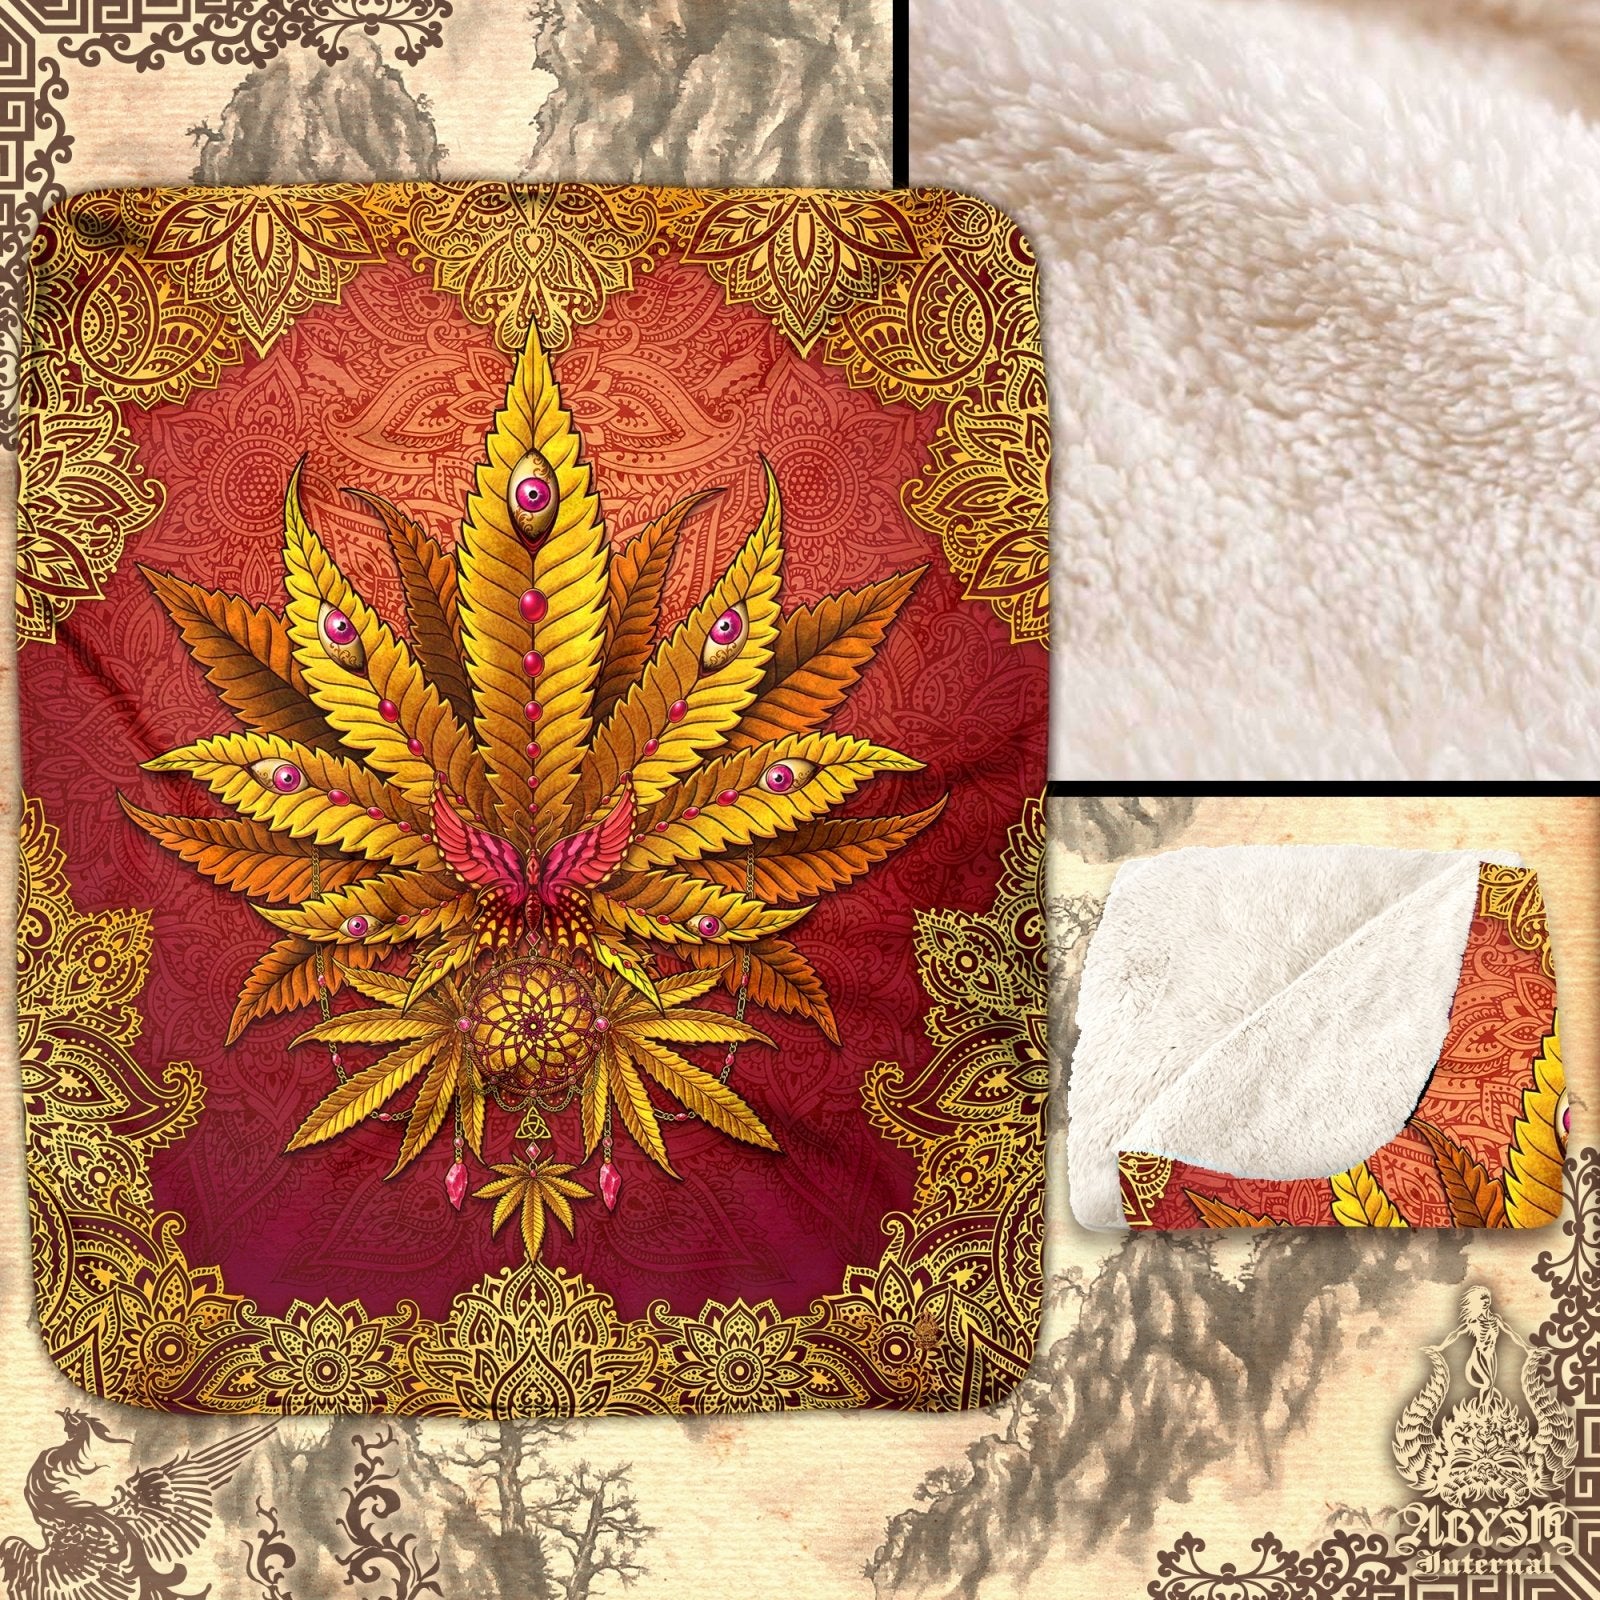 Boho Weed Throw Fleece Blanket, Cannabis Art, Indie and Hippie Home Decor, Bohemian 420 Gift - Marijuana, Mandalas - Abysm Internal